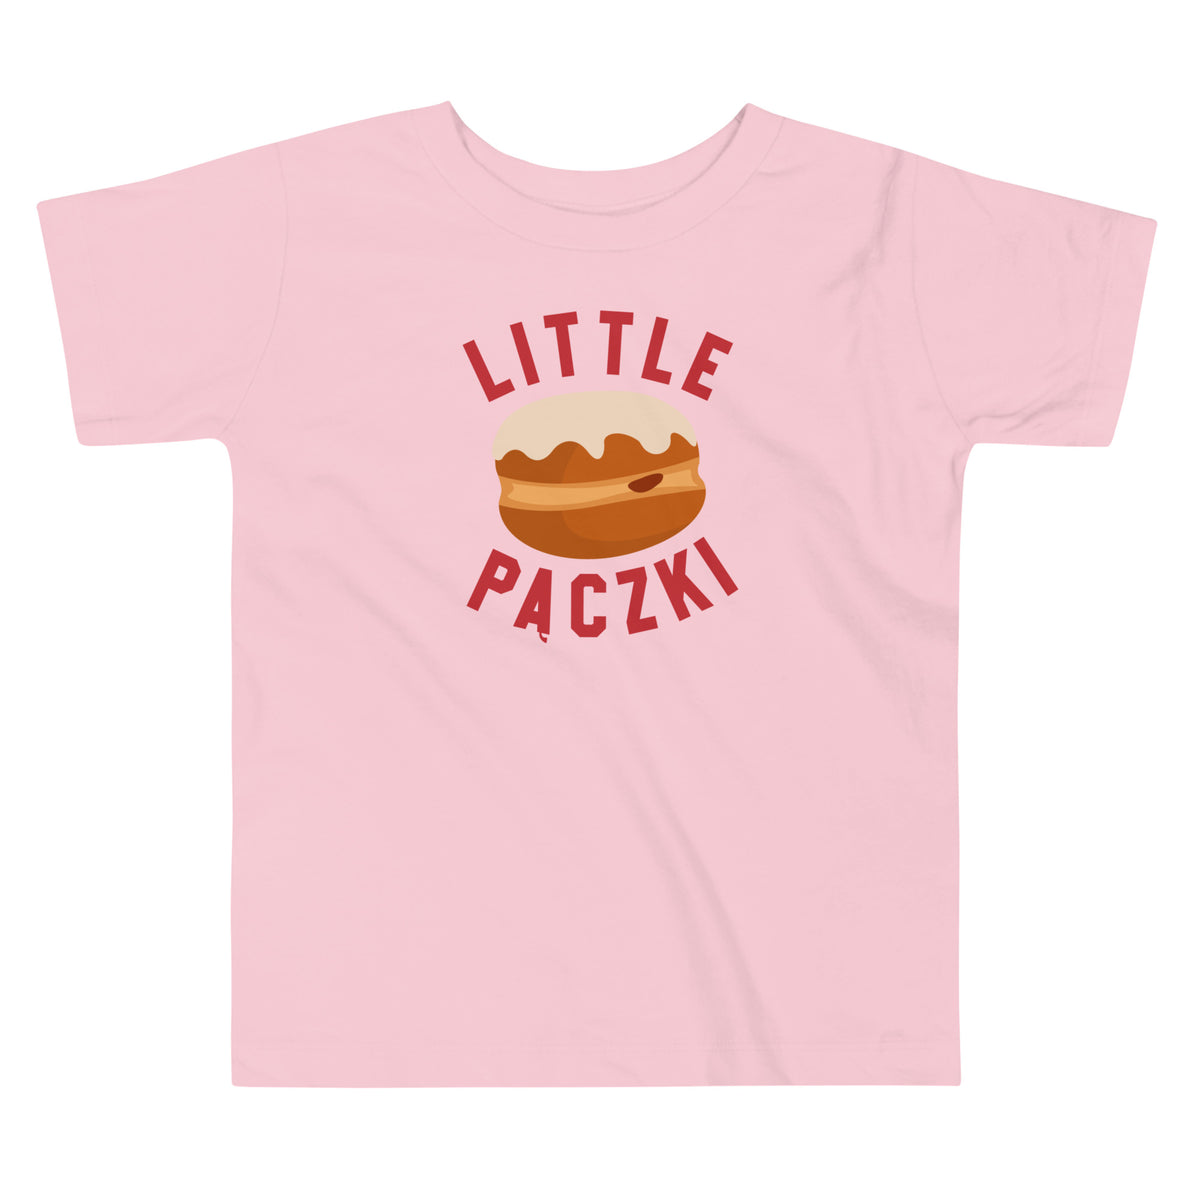 Little Paczki - Toddler T-shirt - Red / Pink  2T  